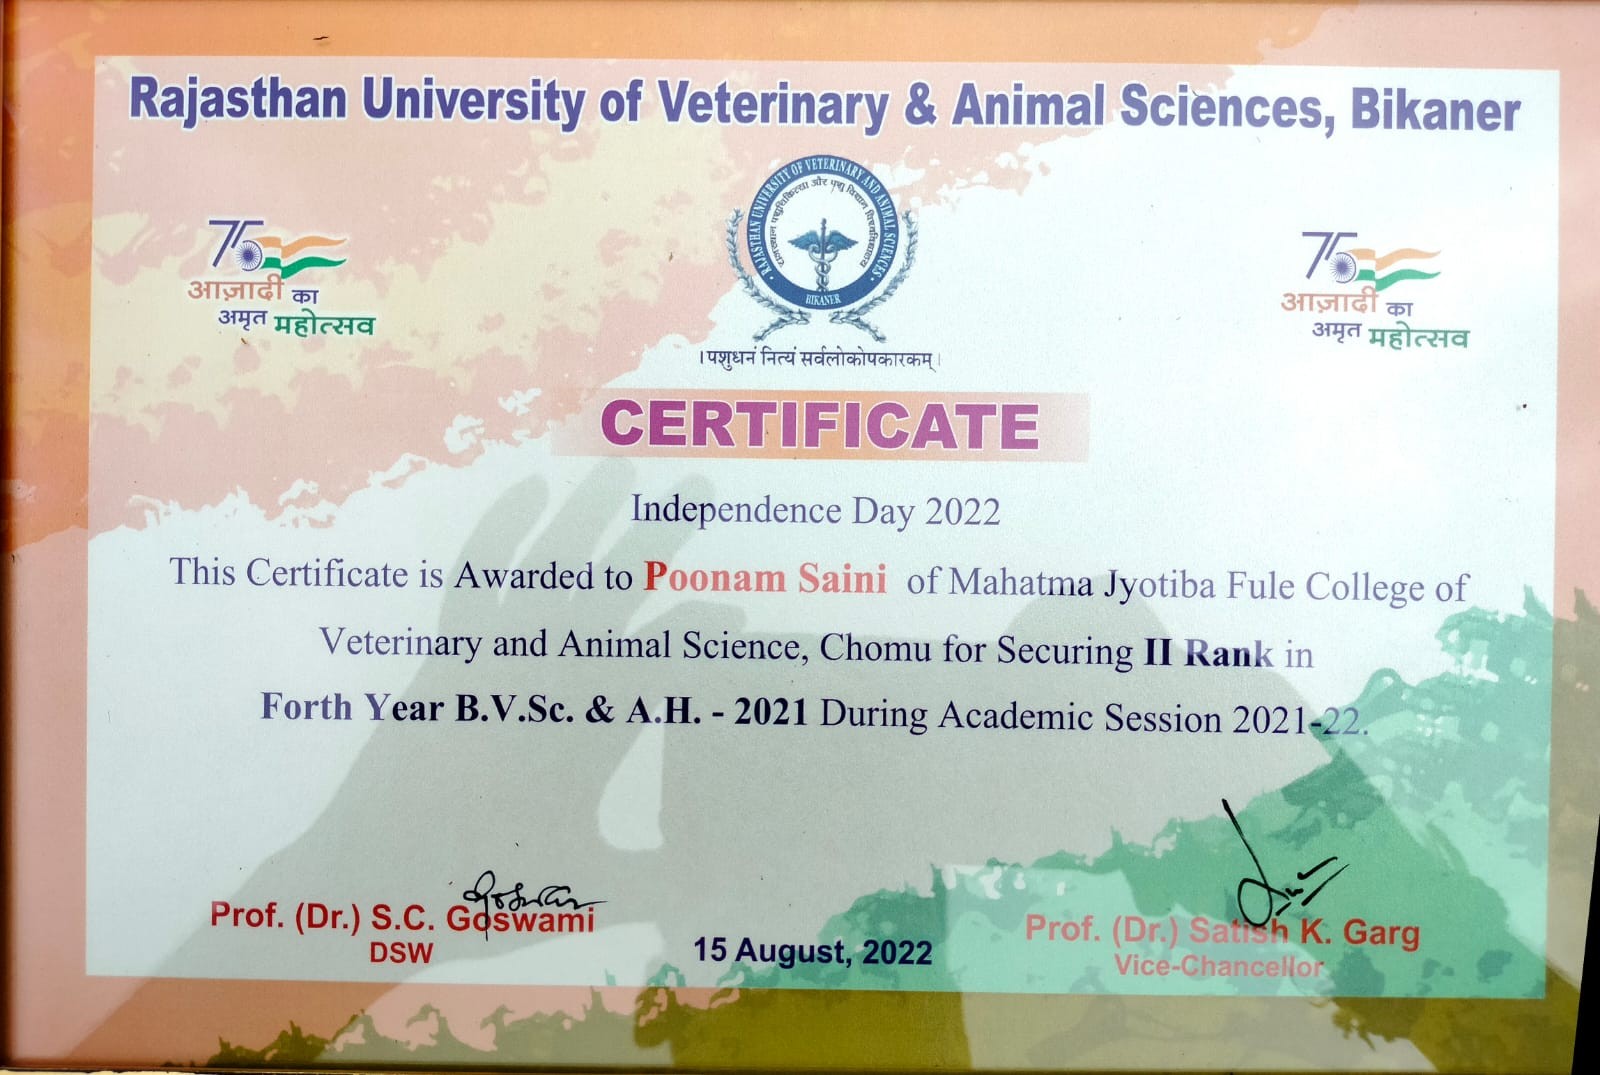 MJF College of Veterinary & Animal Sciences